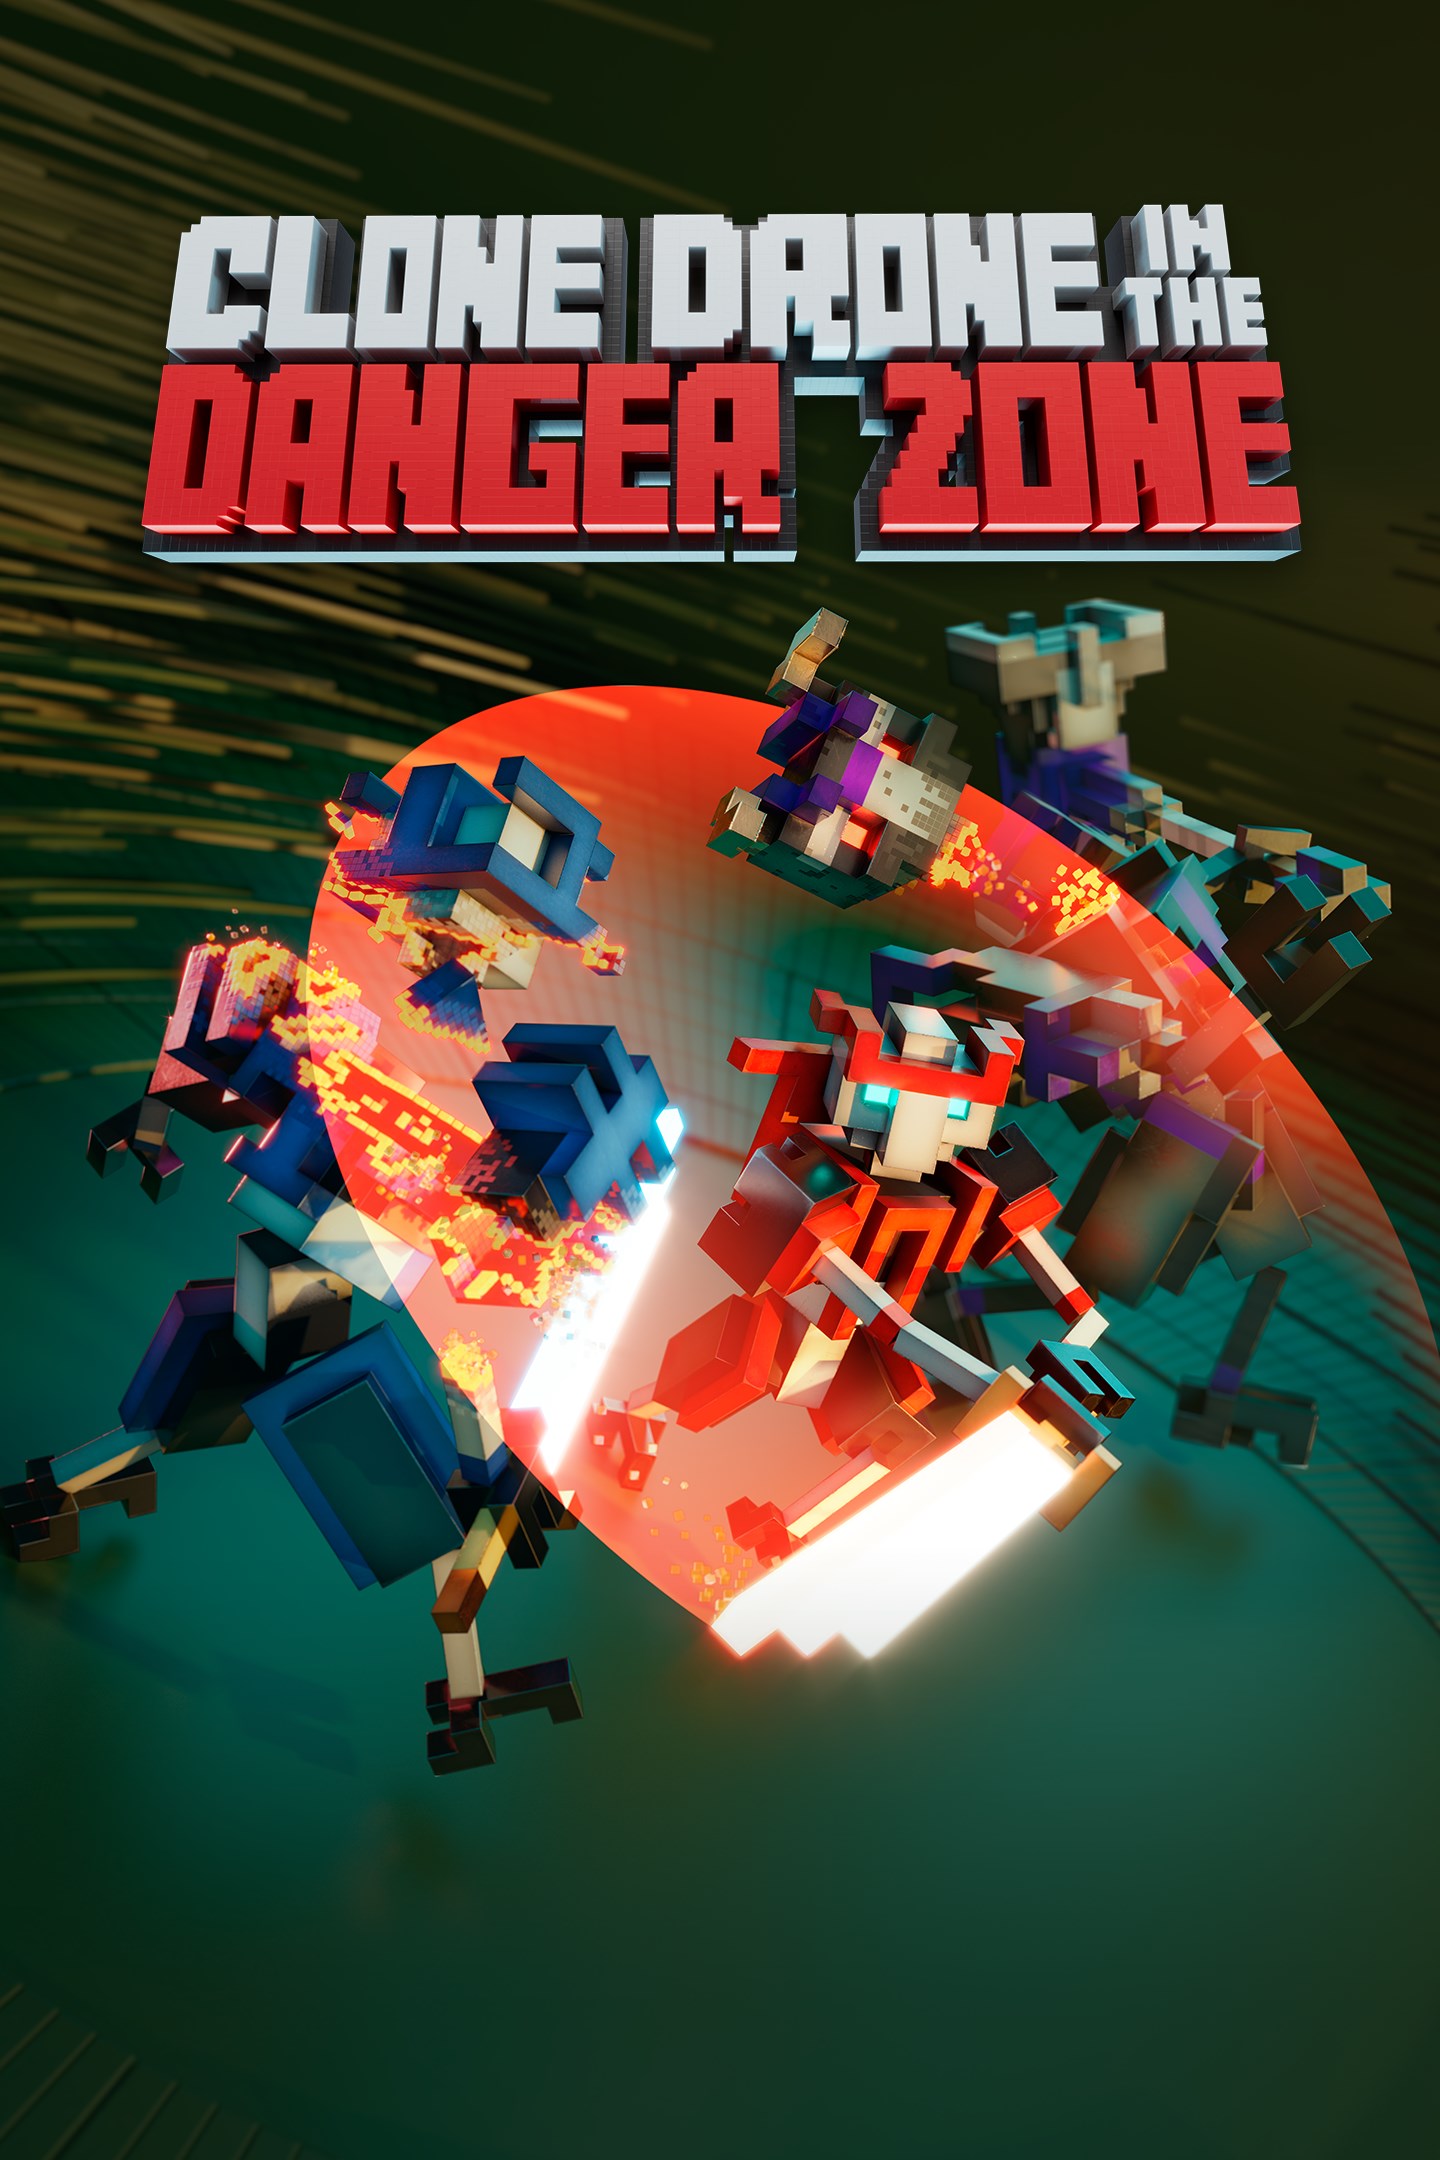 机器人角斗场/Clone Drone in the Danger Zone